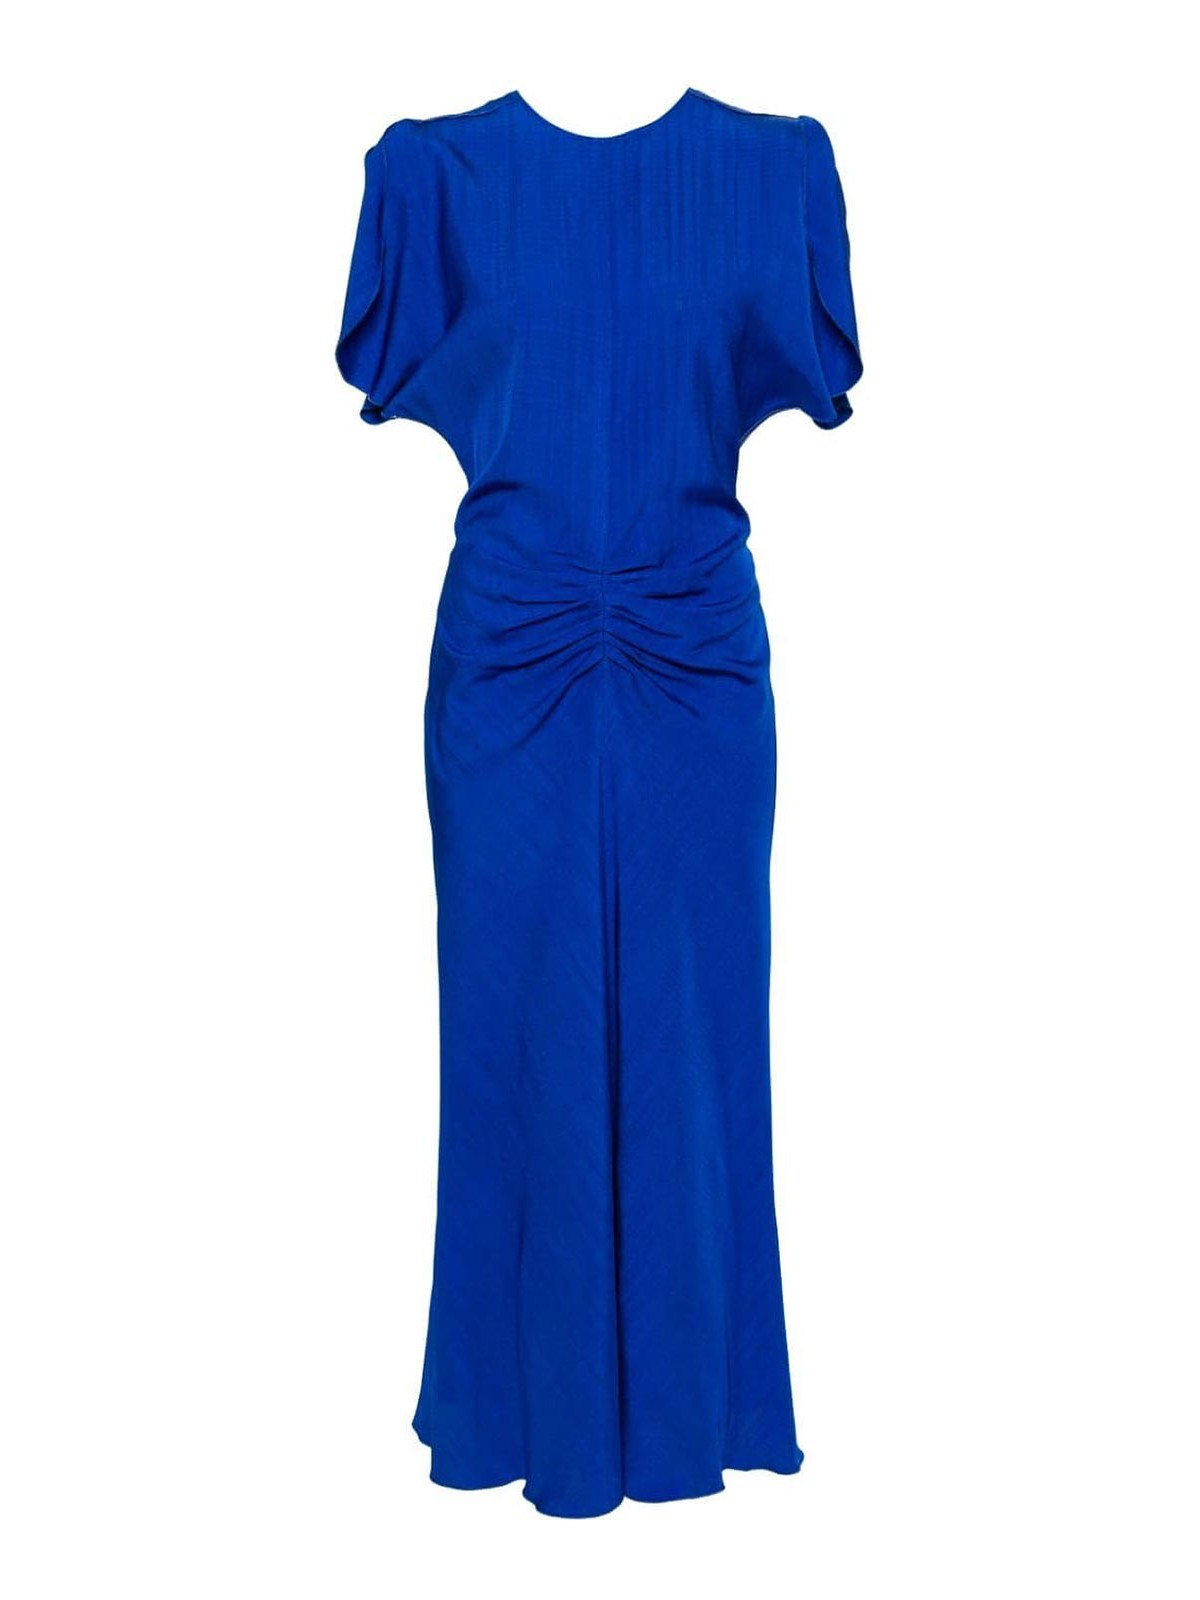 Victoria Beckham Dress With Curls In Blue